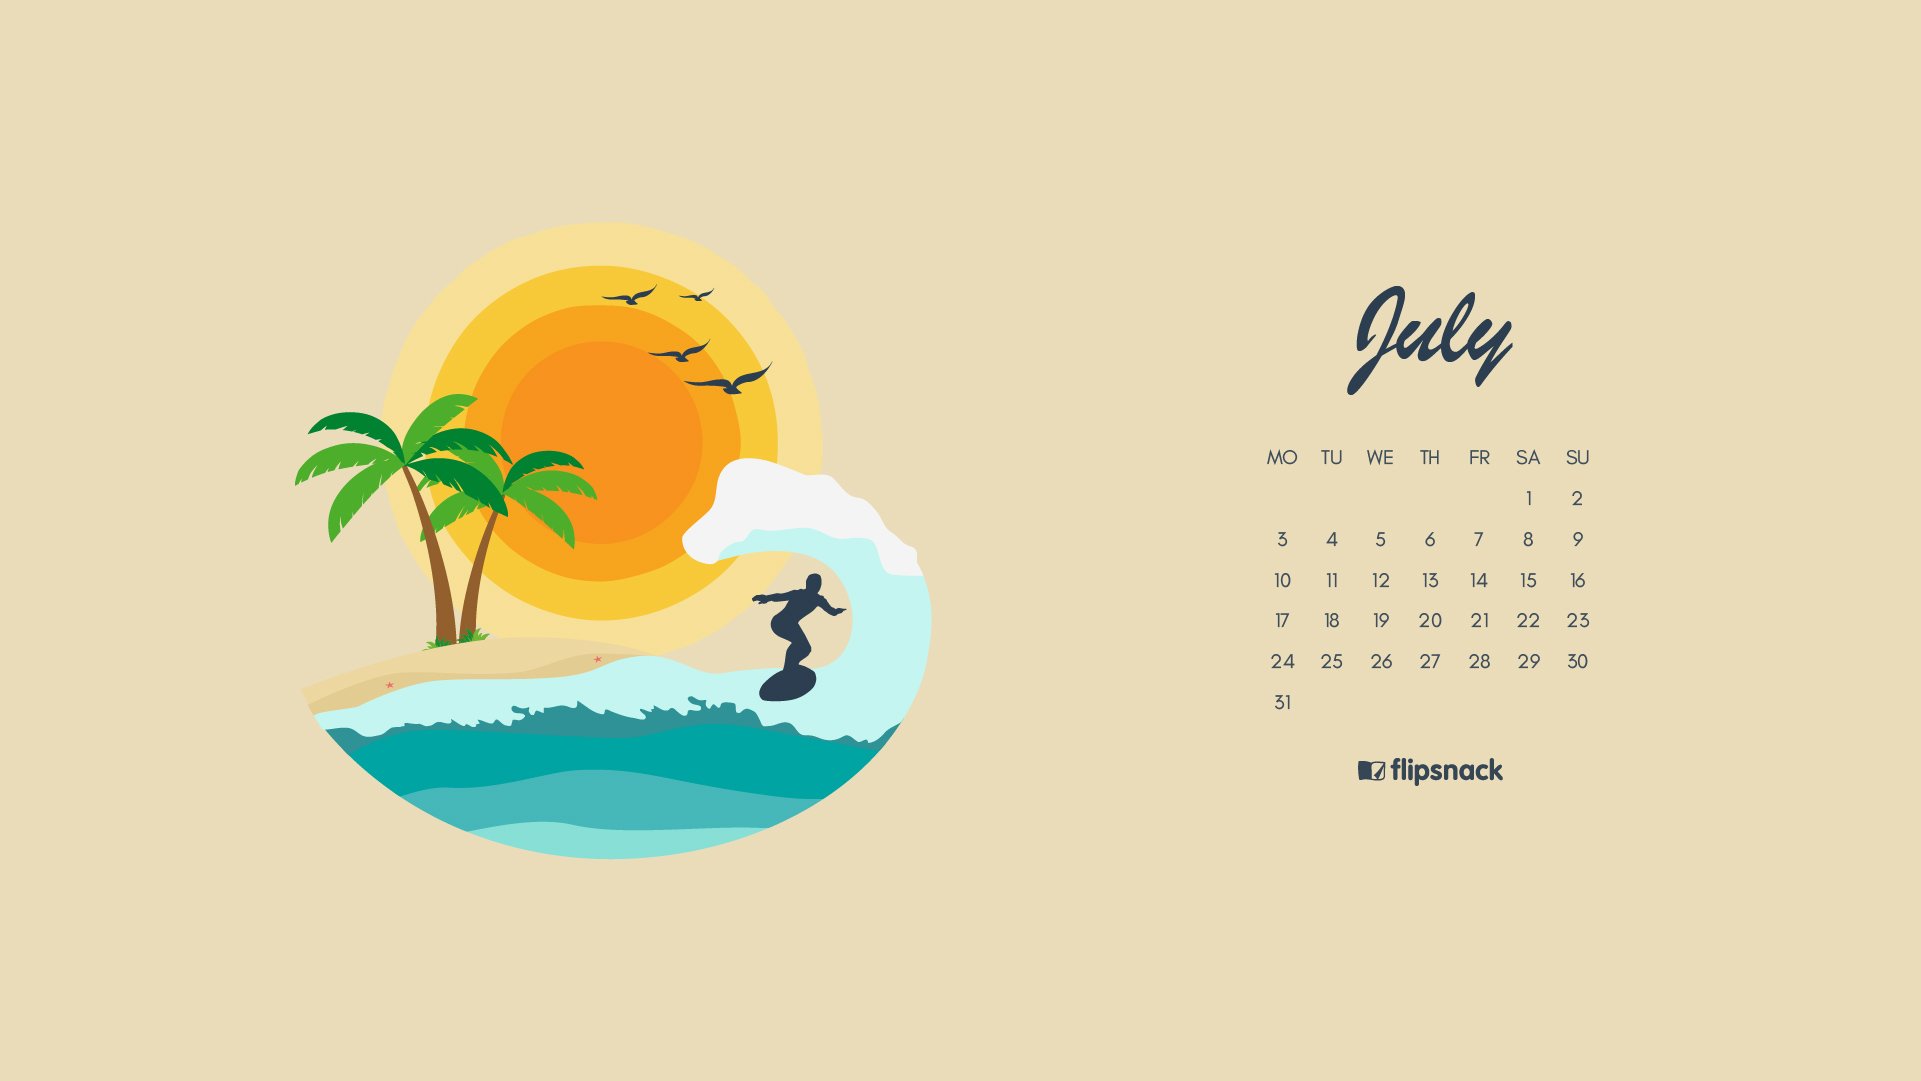 July 2017 calendar wallpaper for desktop background 1921x1081